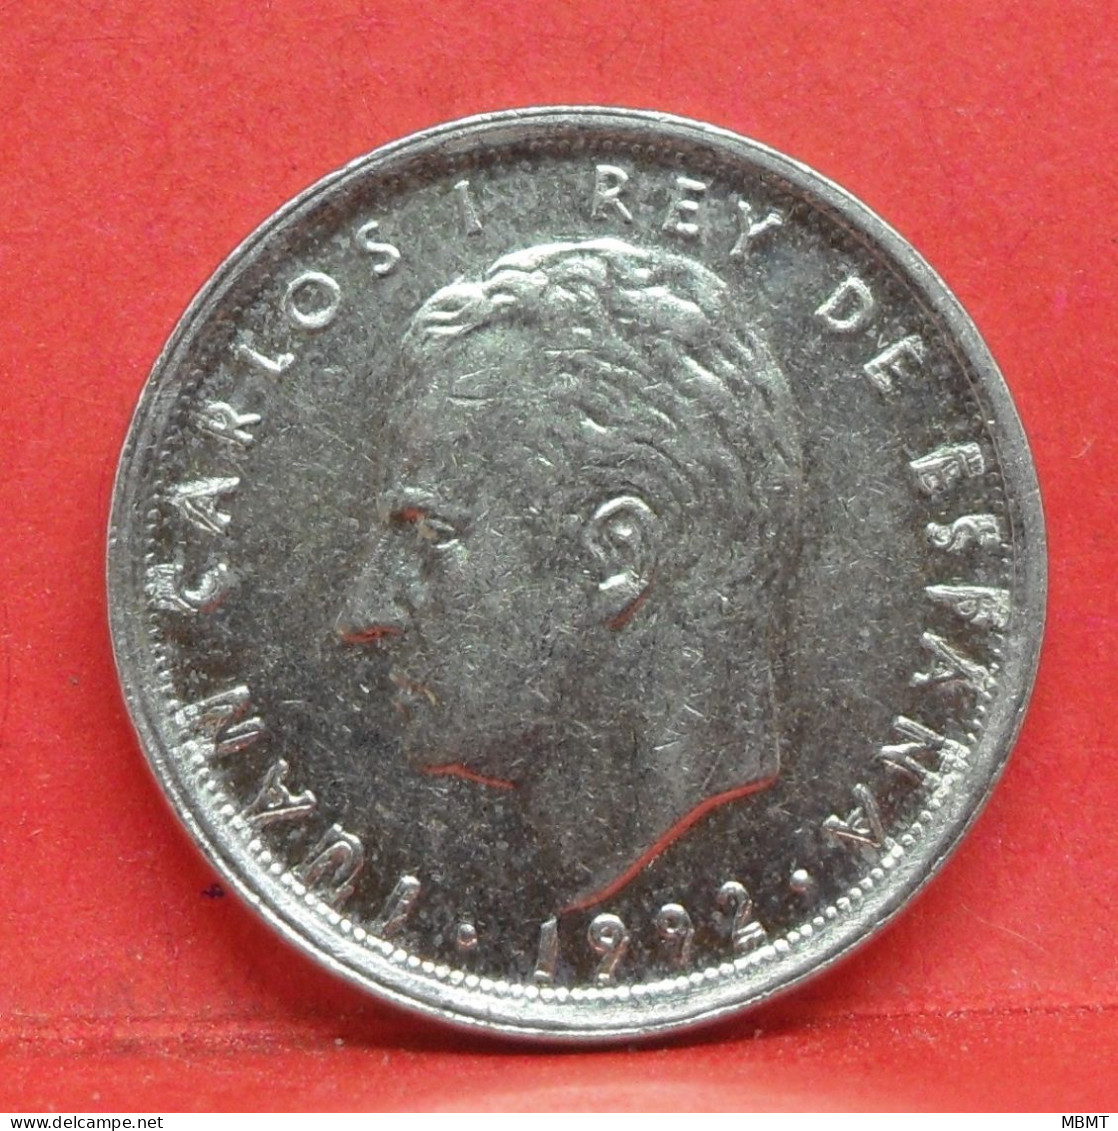 10 Pesetas 1992 - SPL - Pièce Monnaie Espagne - Article N°2425 - 10 Pesetas